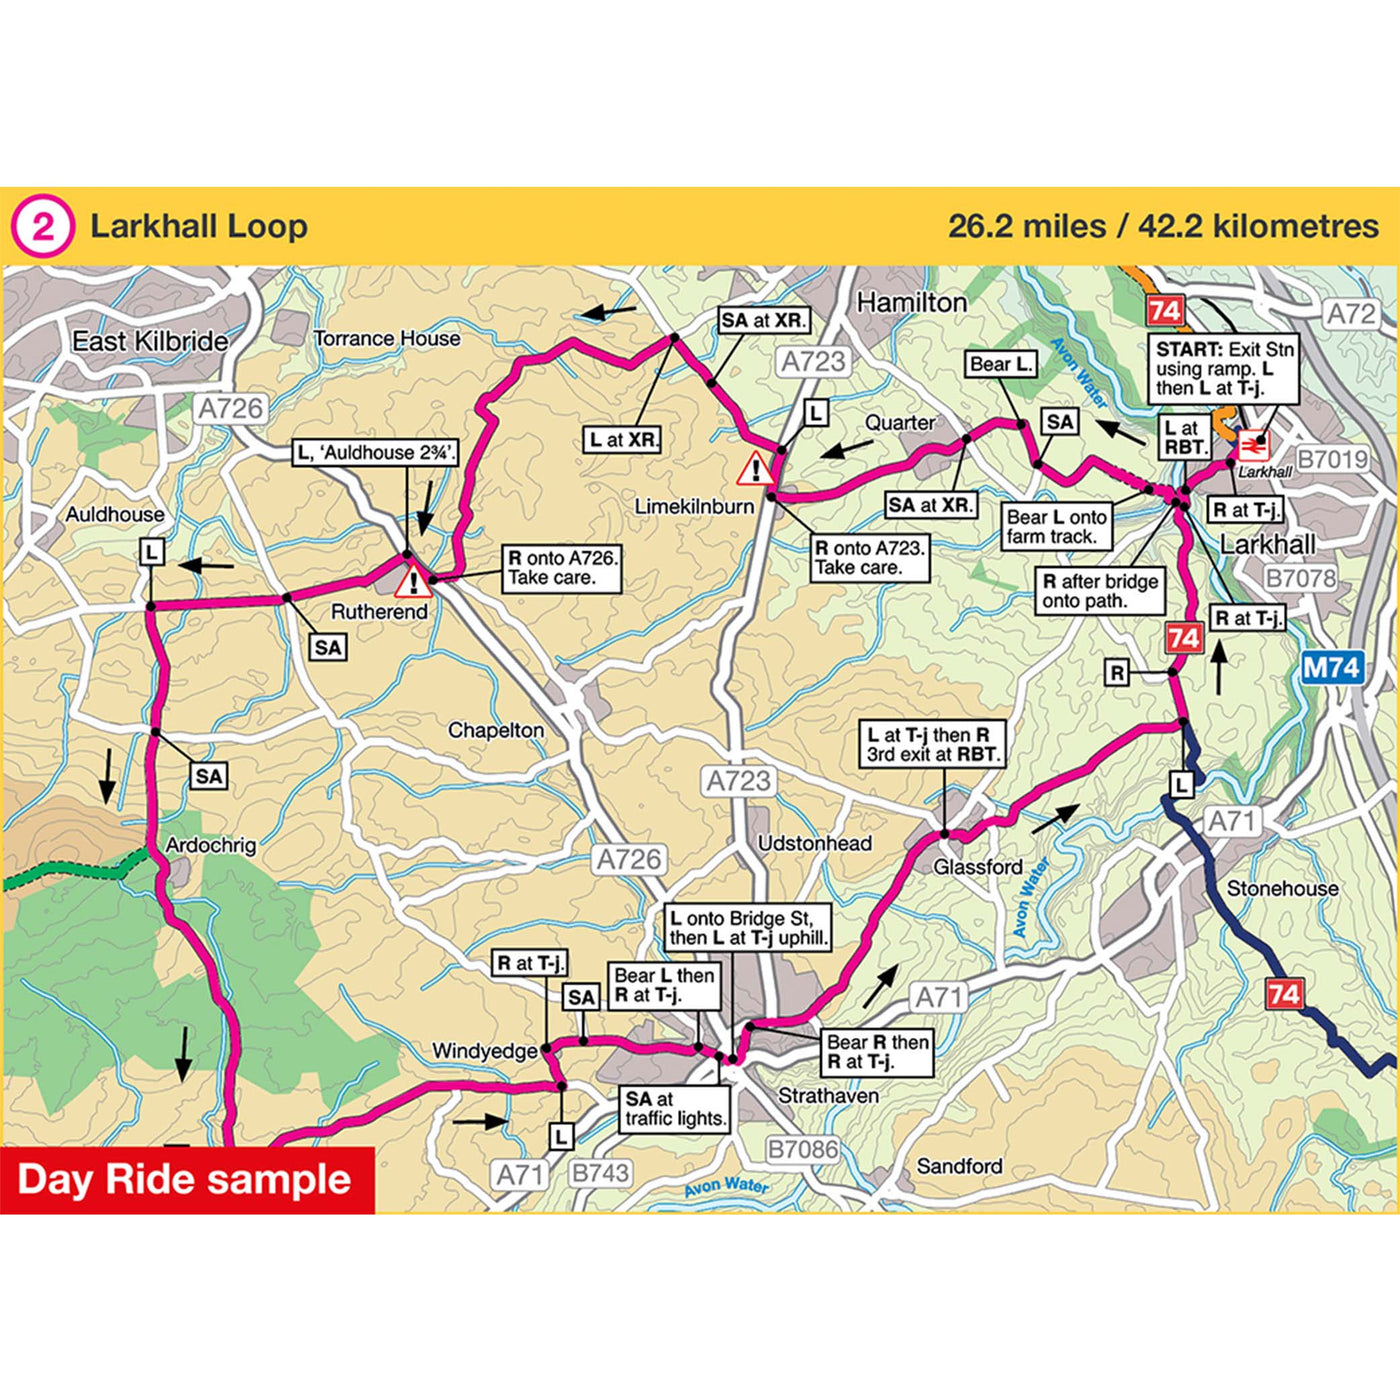 Day ride sample: Larkhall Loop, 26.2 miles